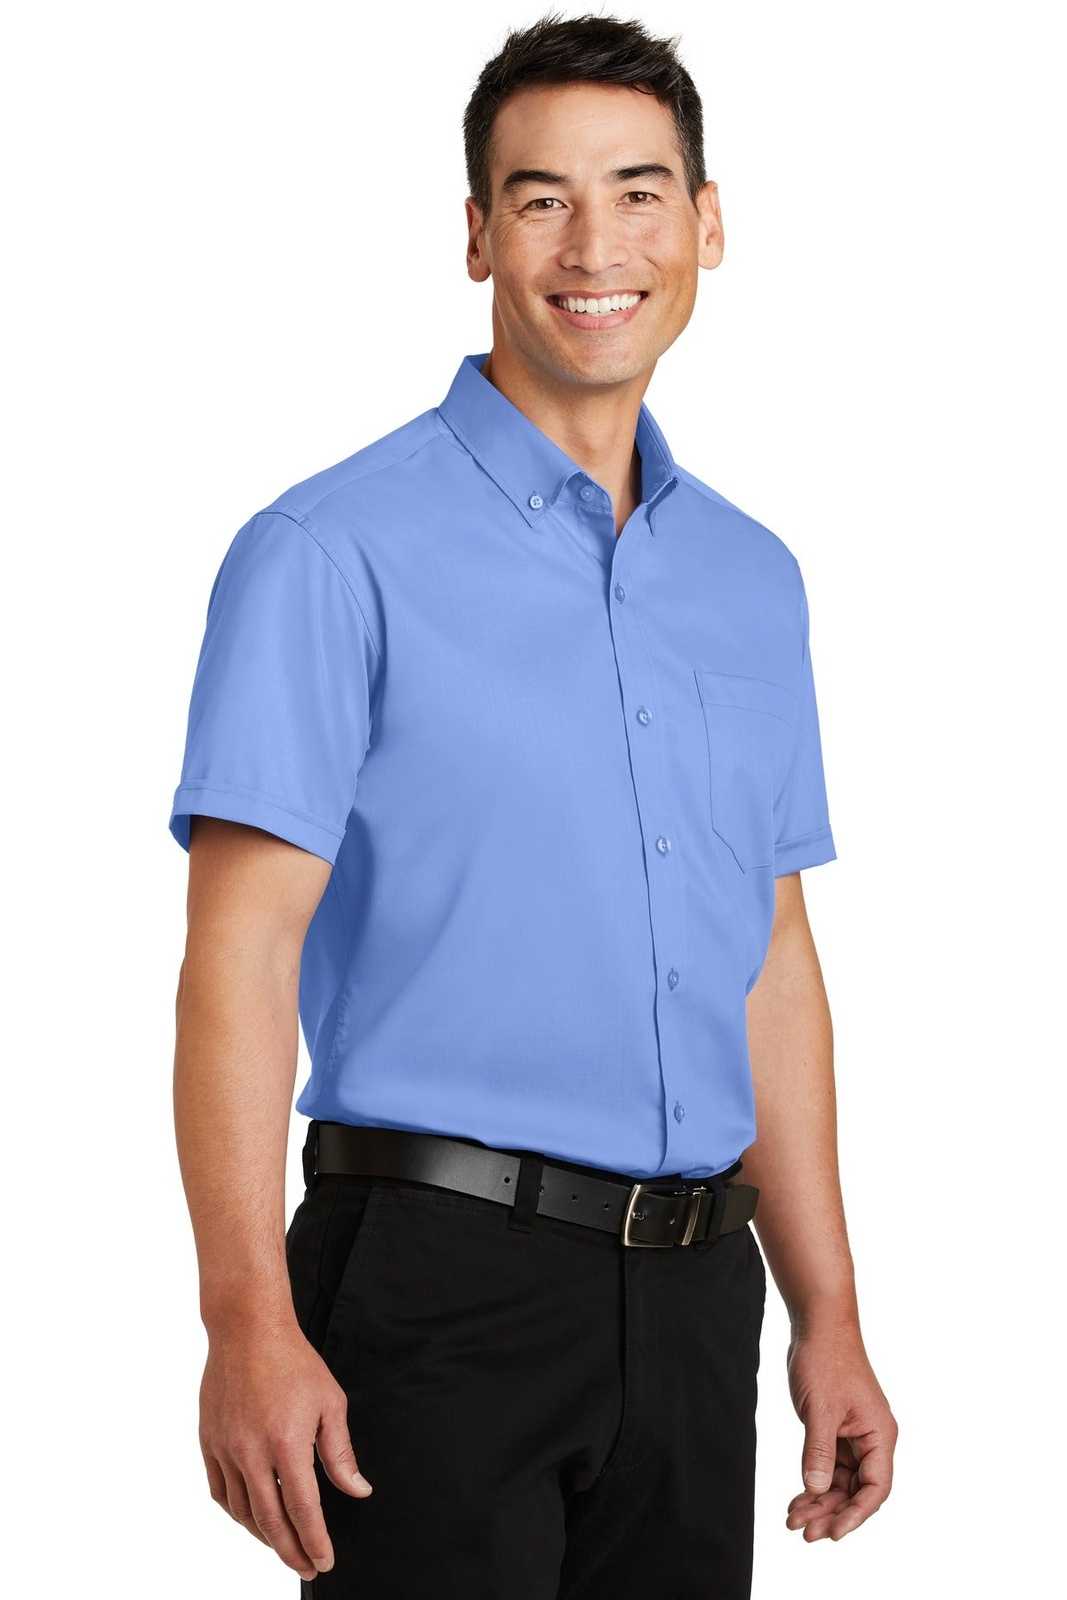 Port Authority S664 Short Sleeve Superpro Twill Shirt - Ultramarine Blue - HIT a Double - 4